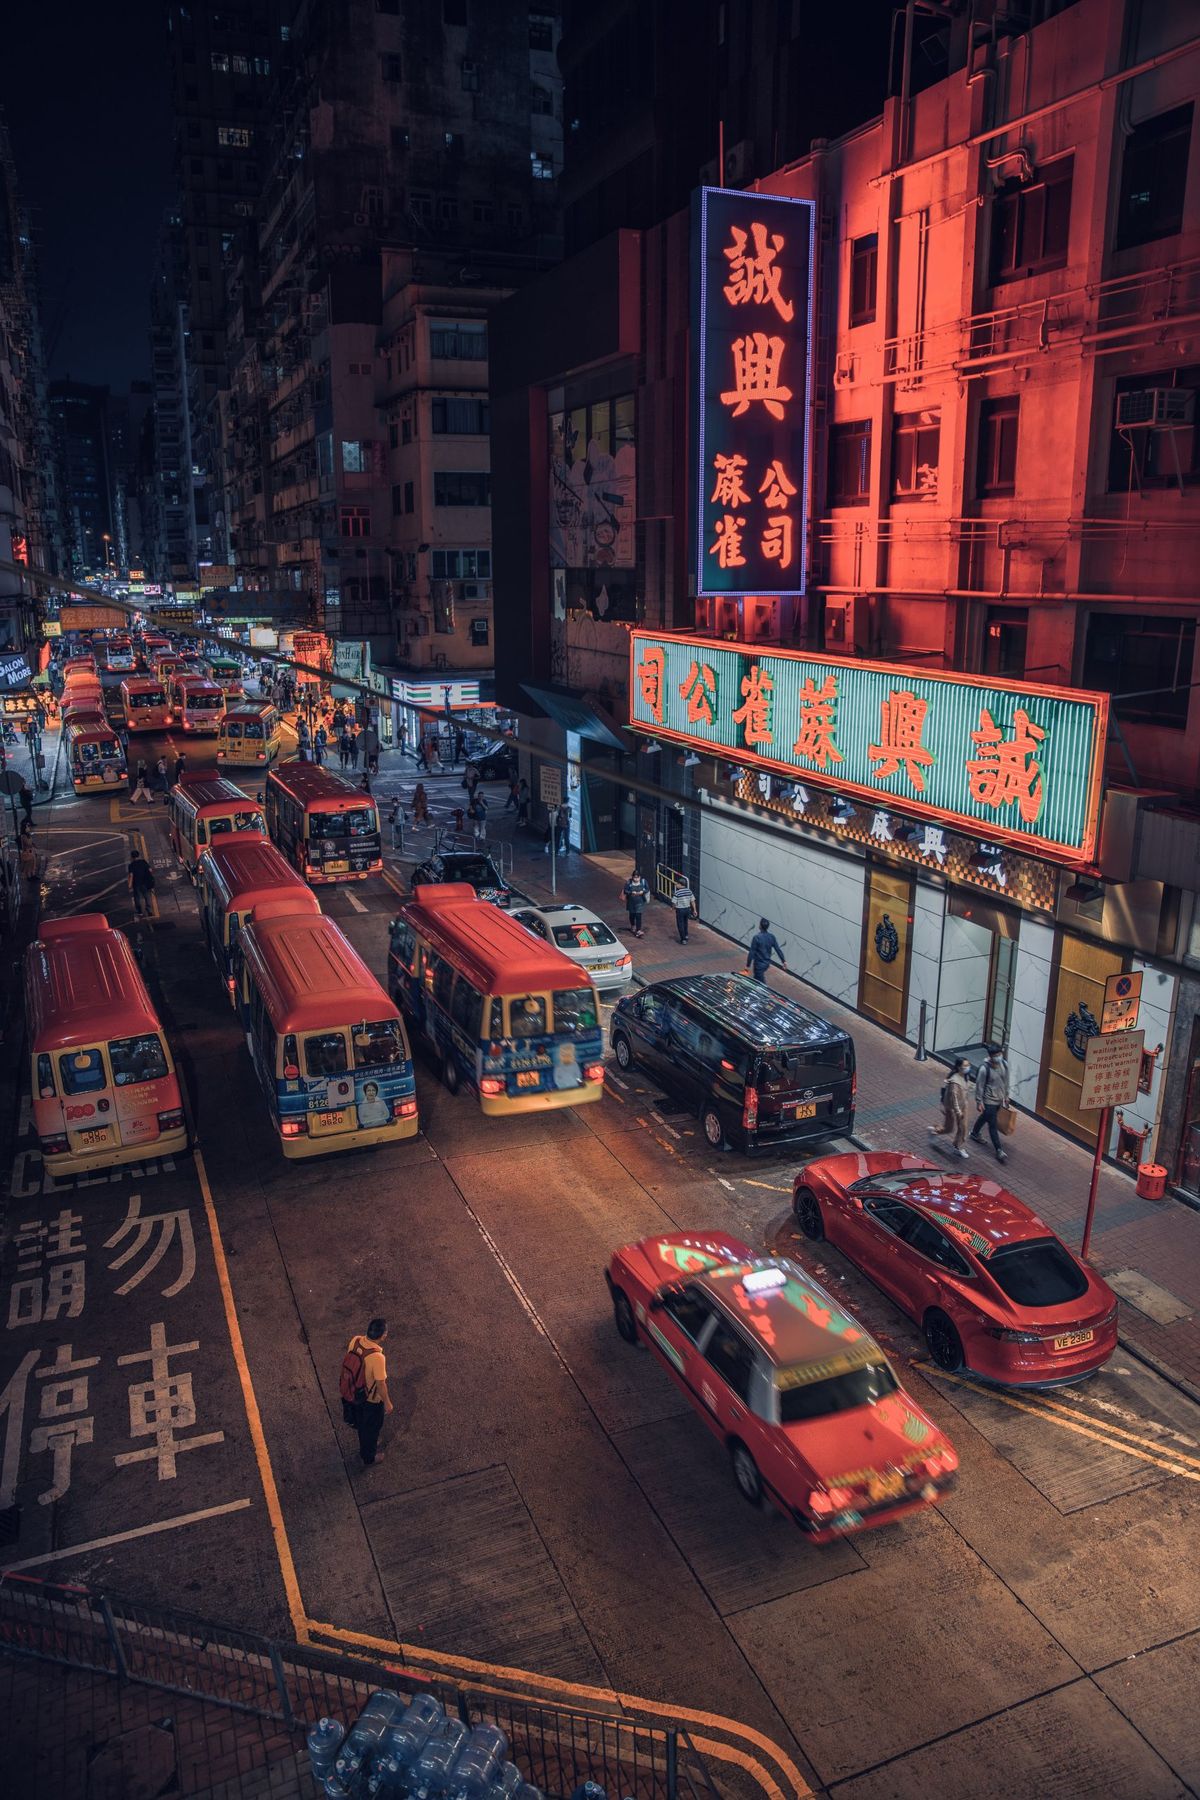 Hong Kong through the lens of city street photographer, James Sin